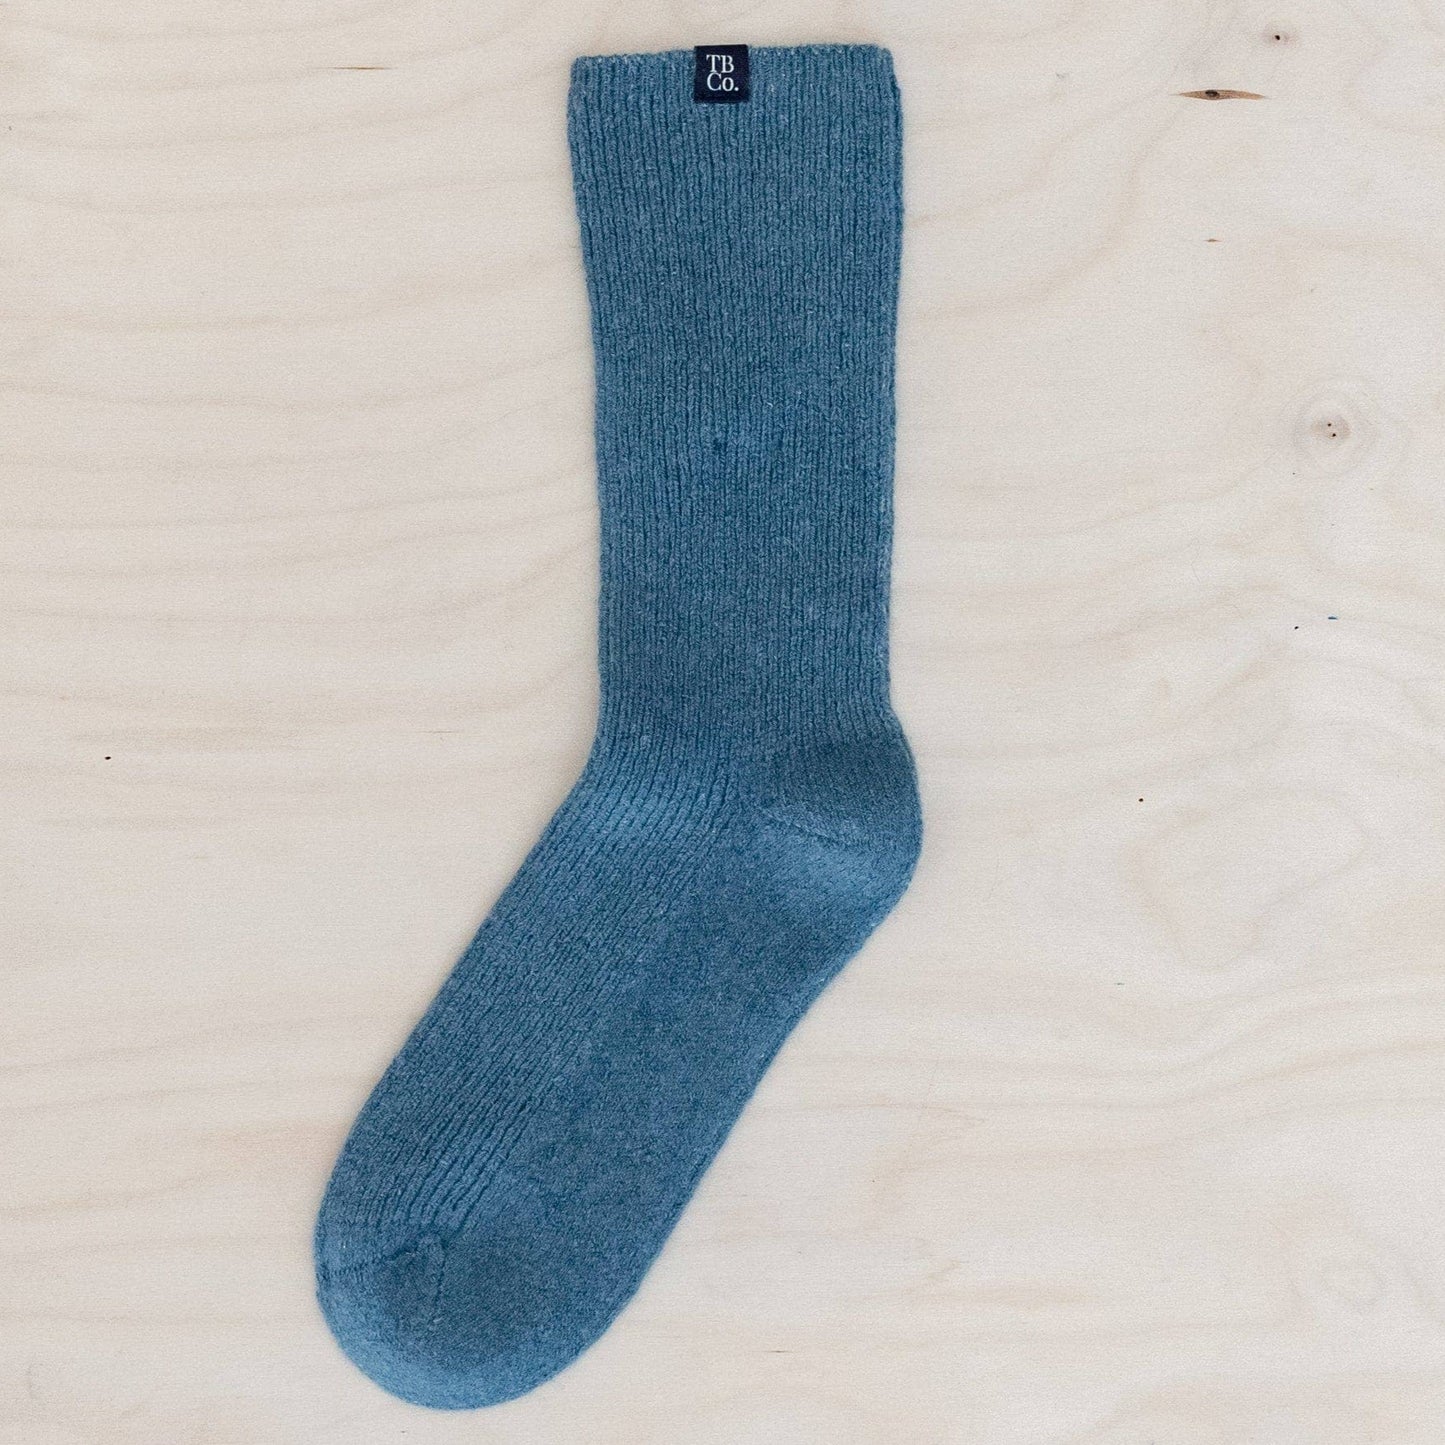 Cashmere & Merino Socks in Stone Blue